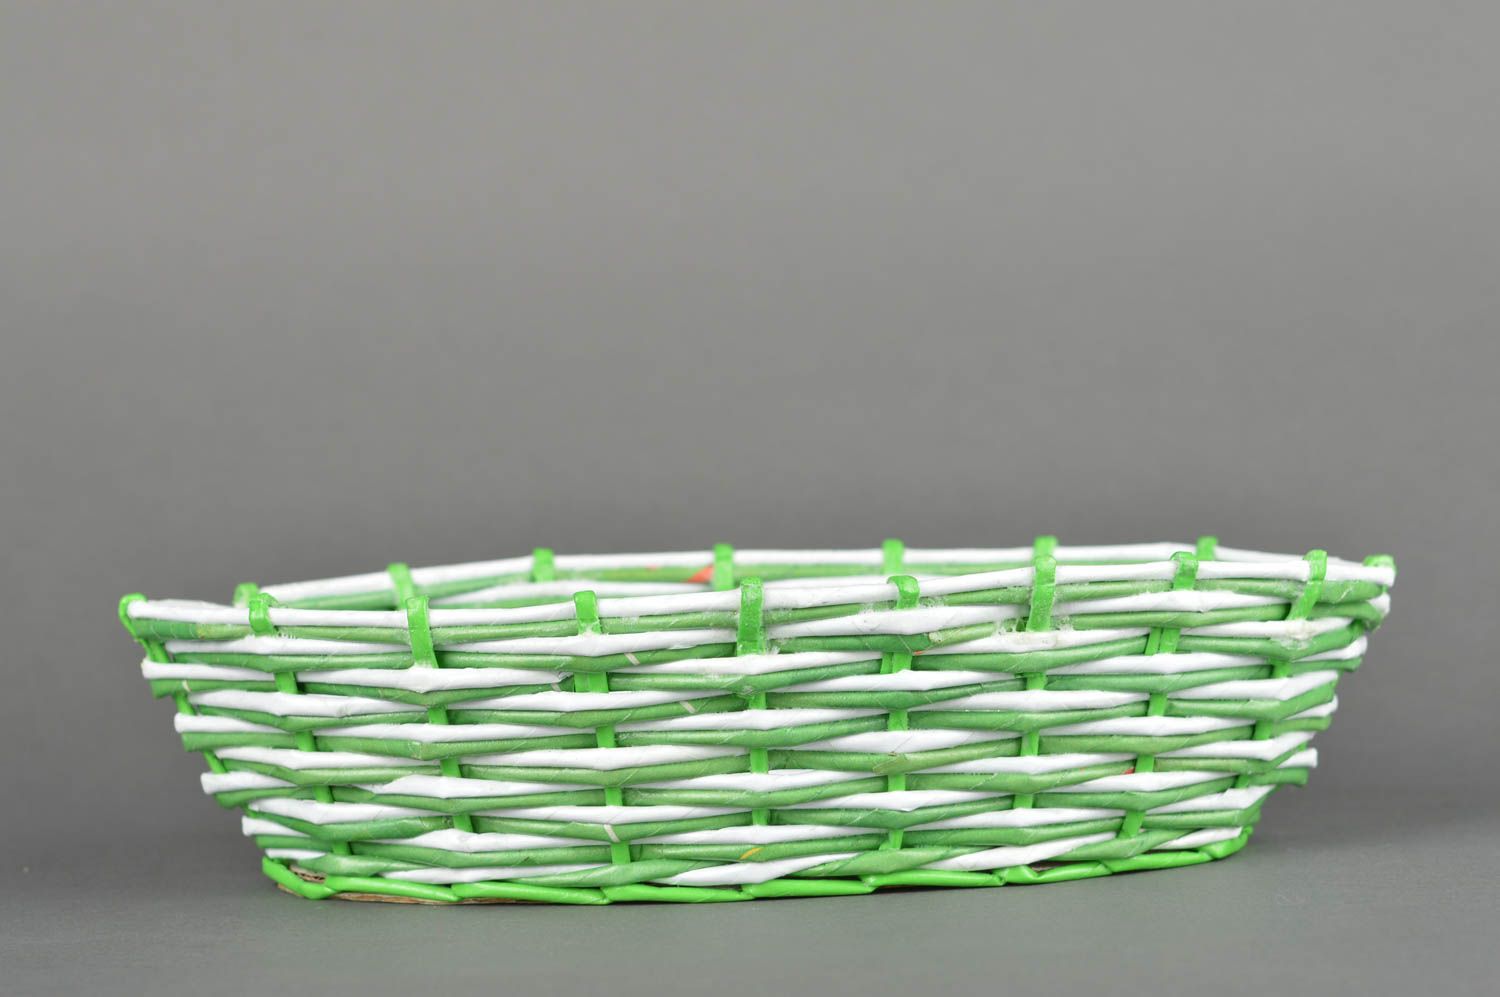 Handmade wicker basket designer basket for home decor ideas unusual gift photo 3